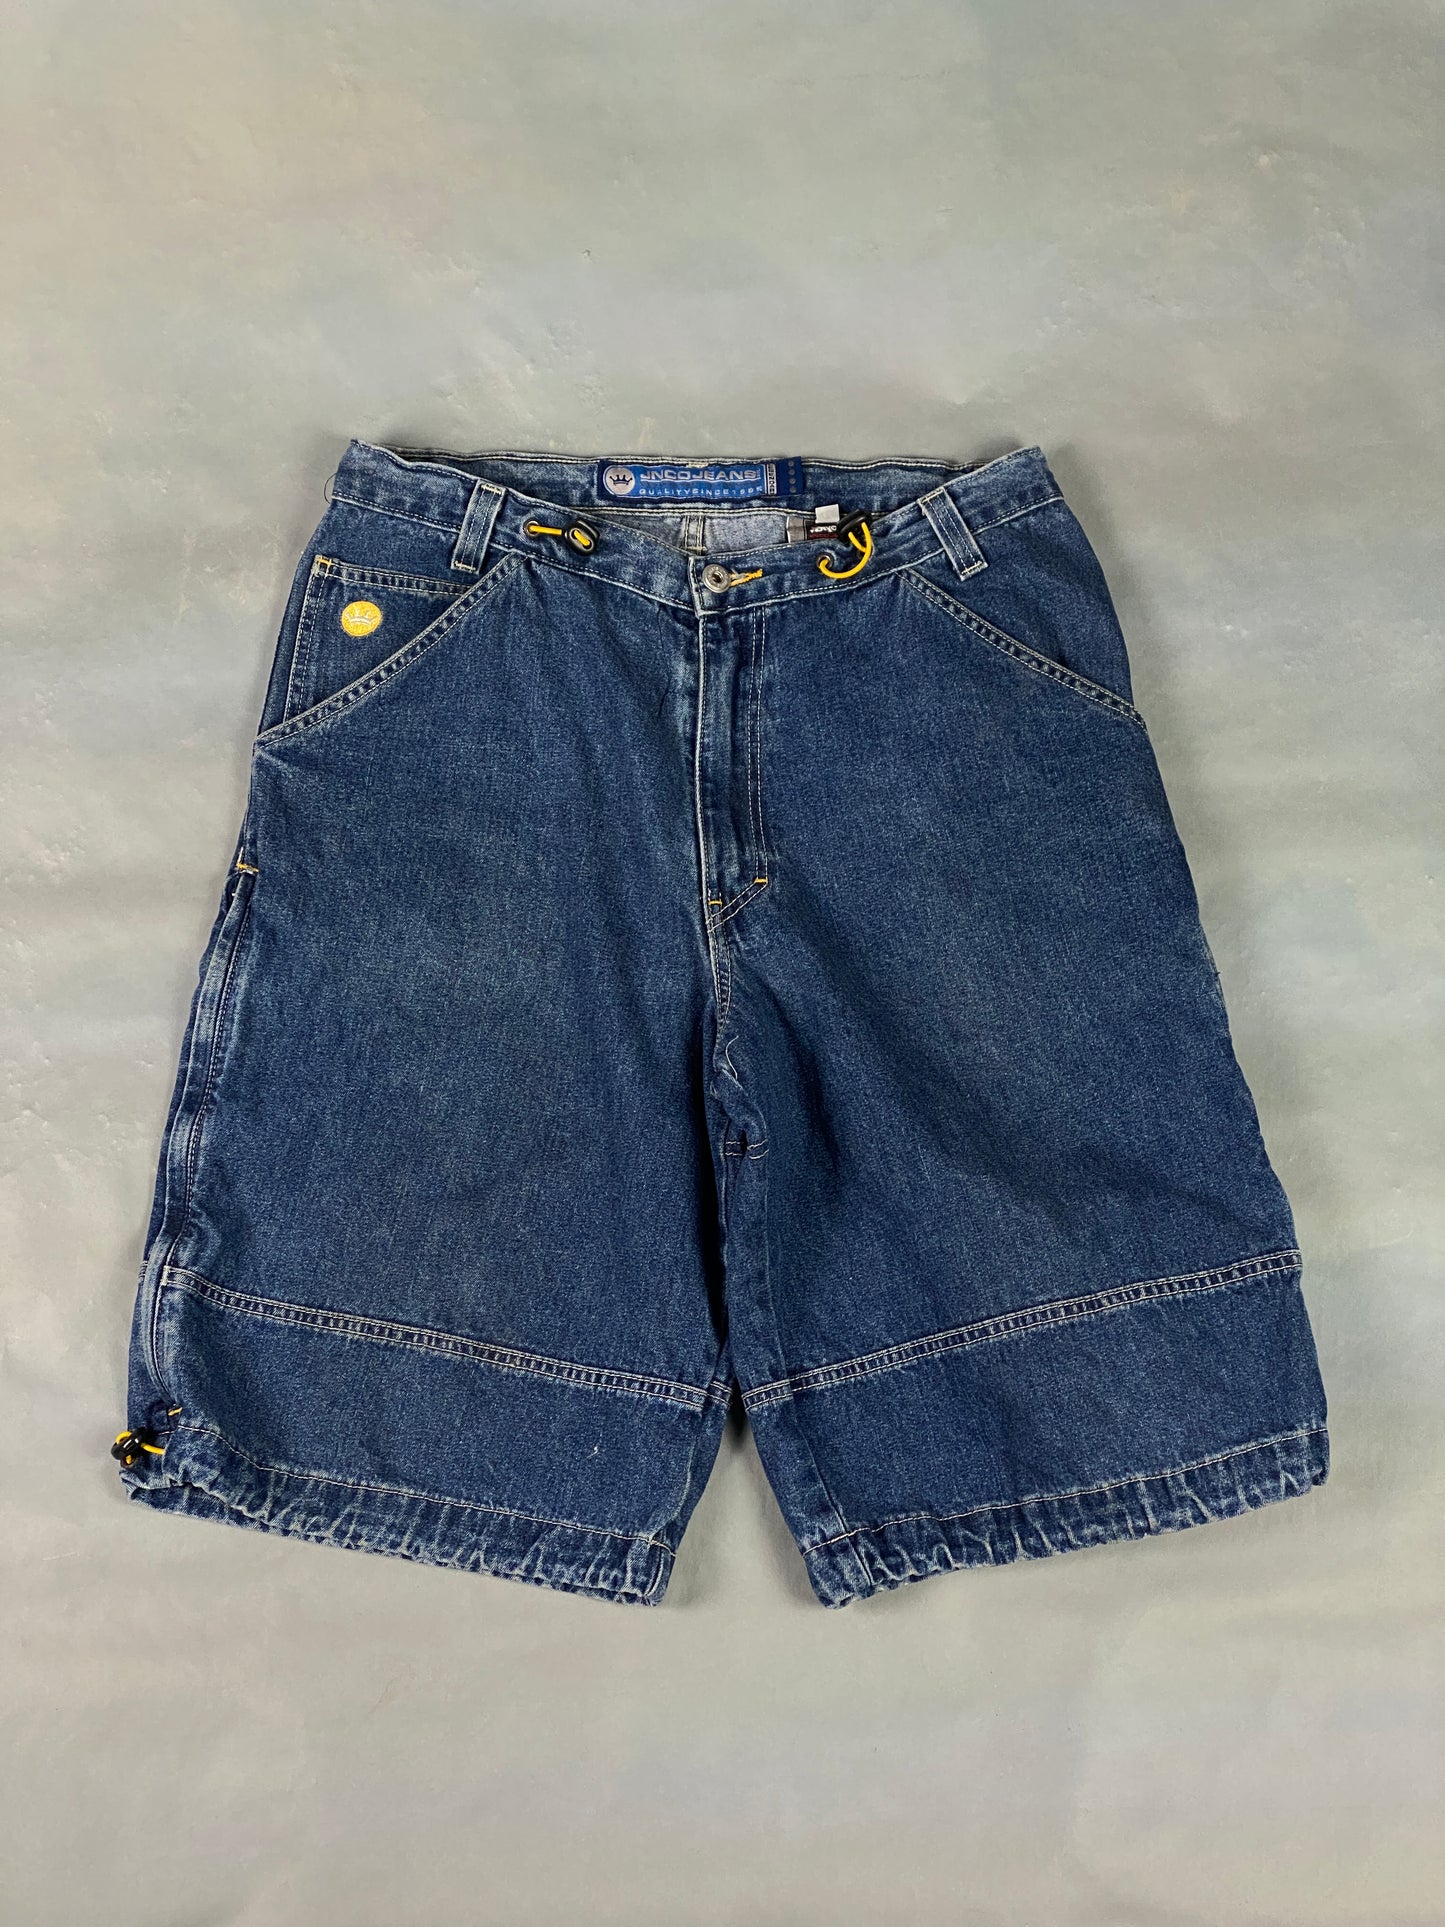 JNCO Vintage Shorts Jeans - 36